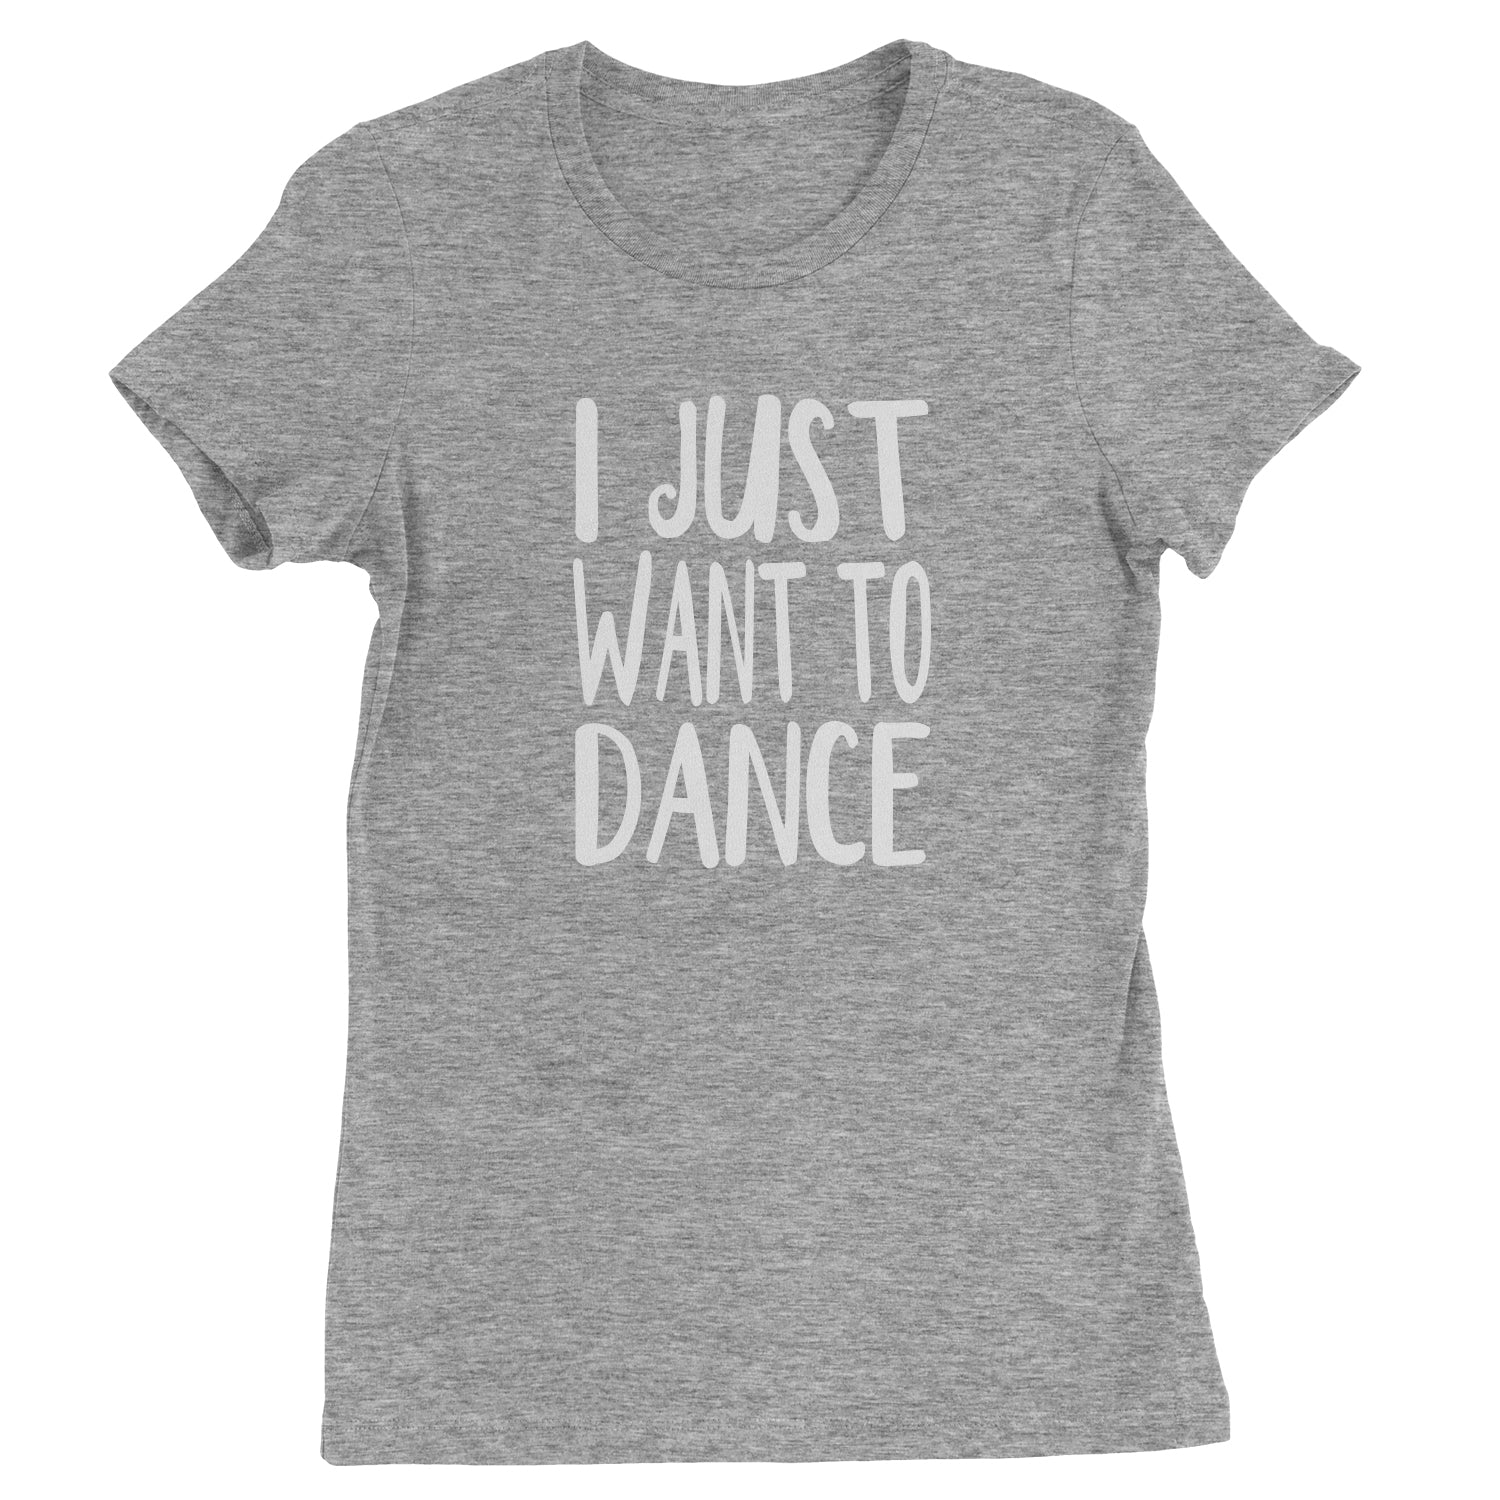 I Just Want To Dance Womens T-shirt boomerang, dancing, jo, jojo by Expression Tees